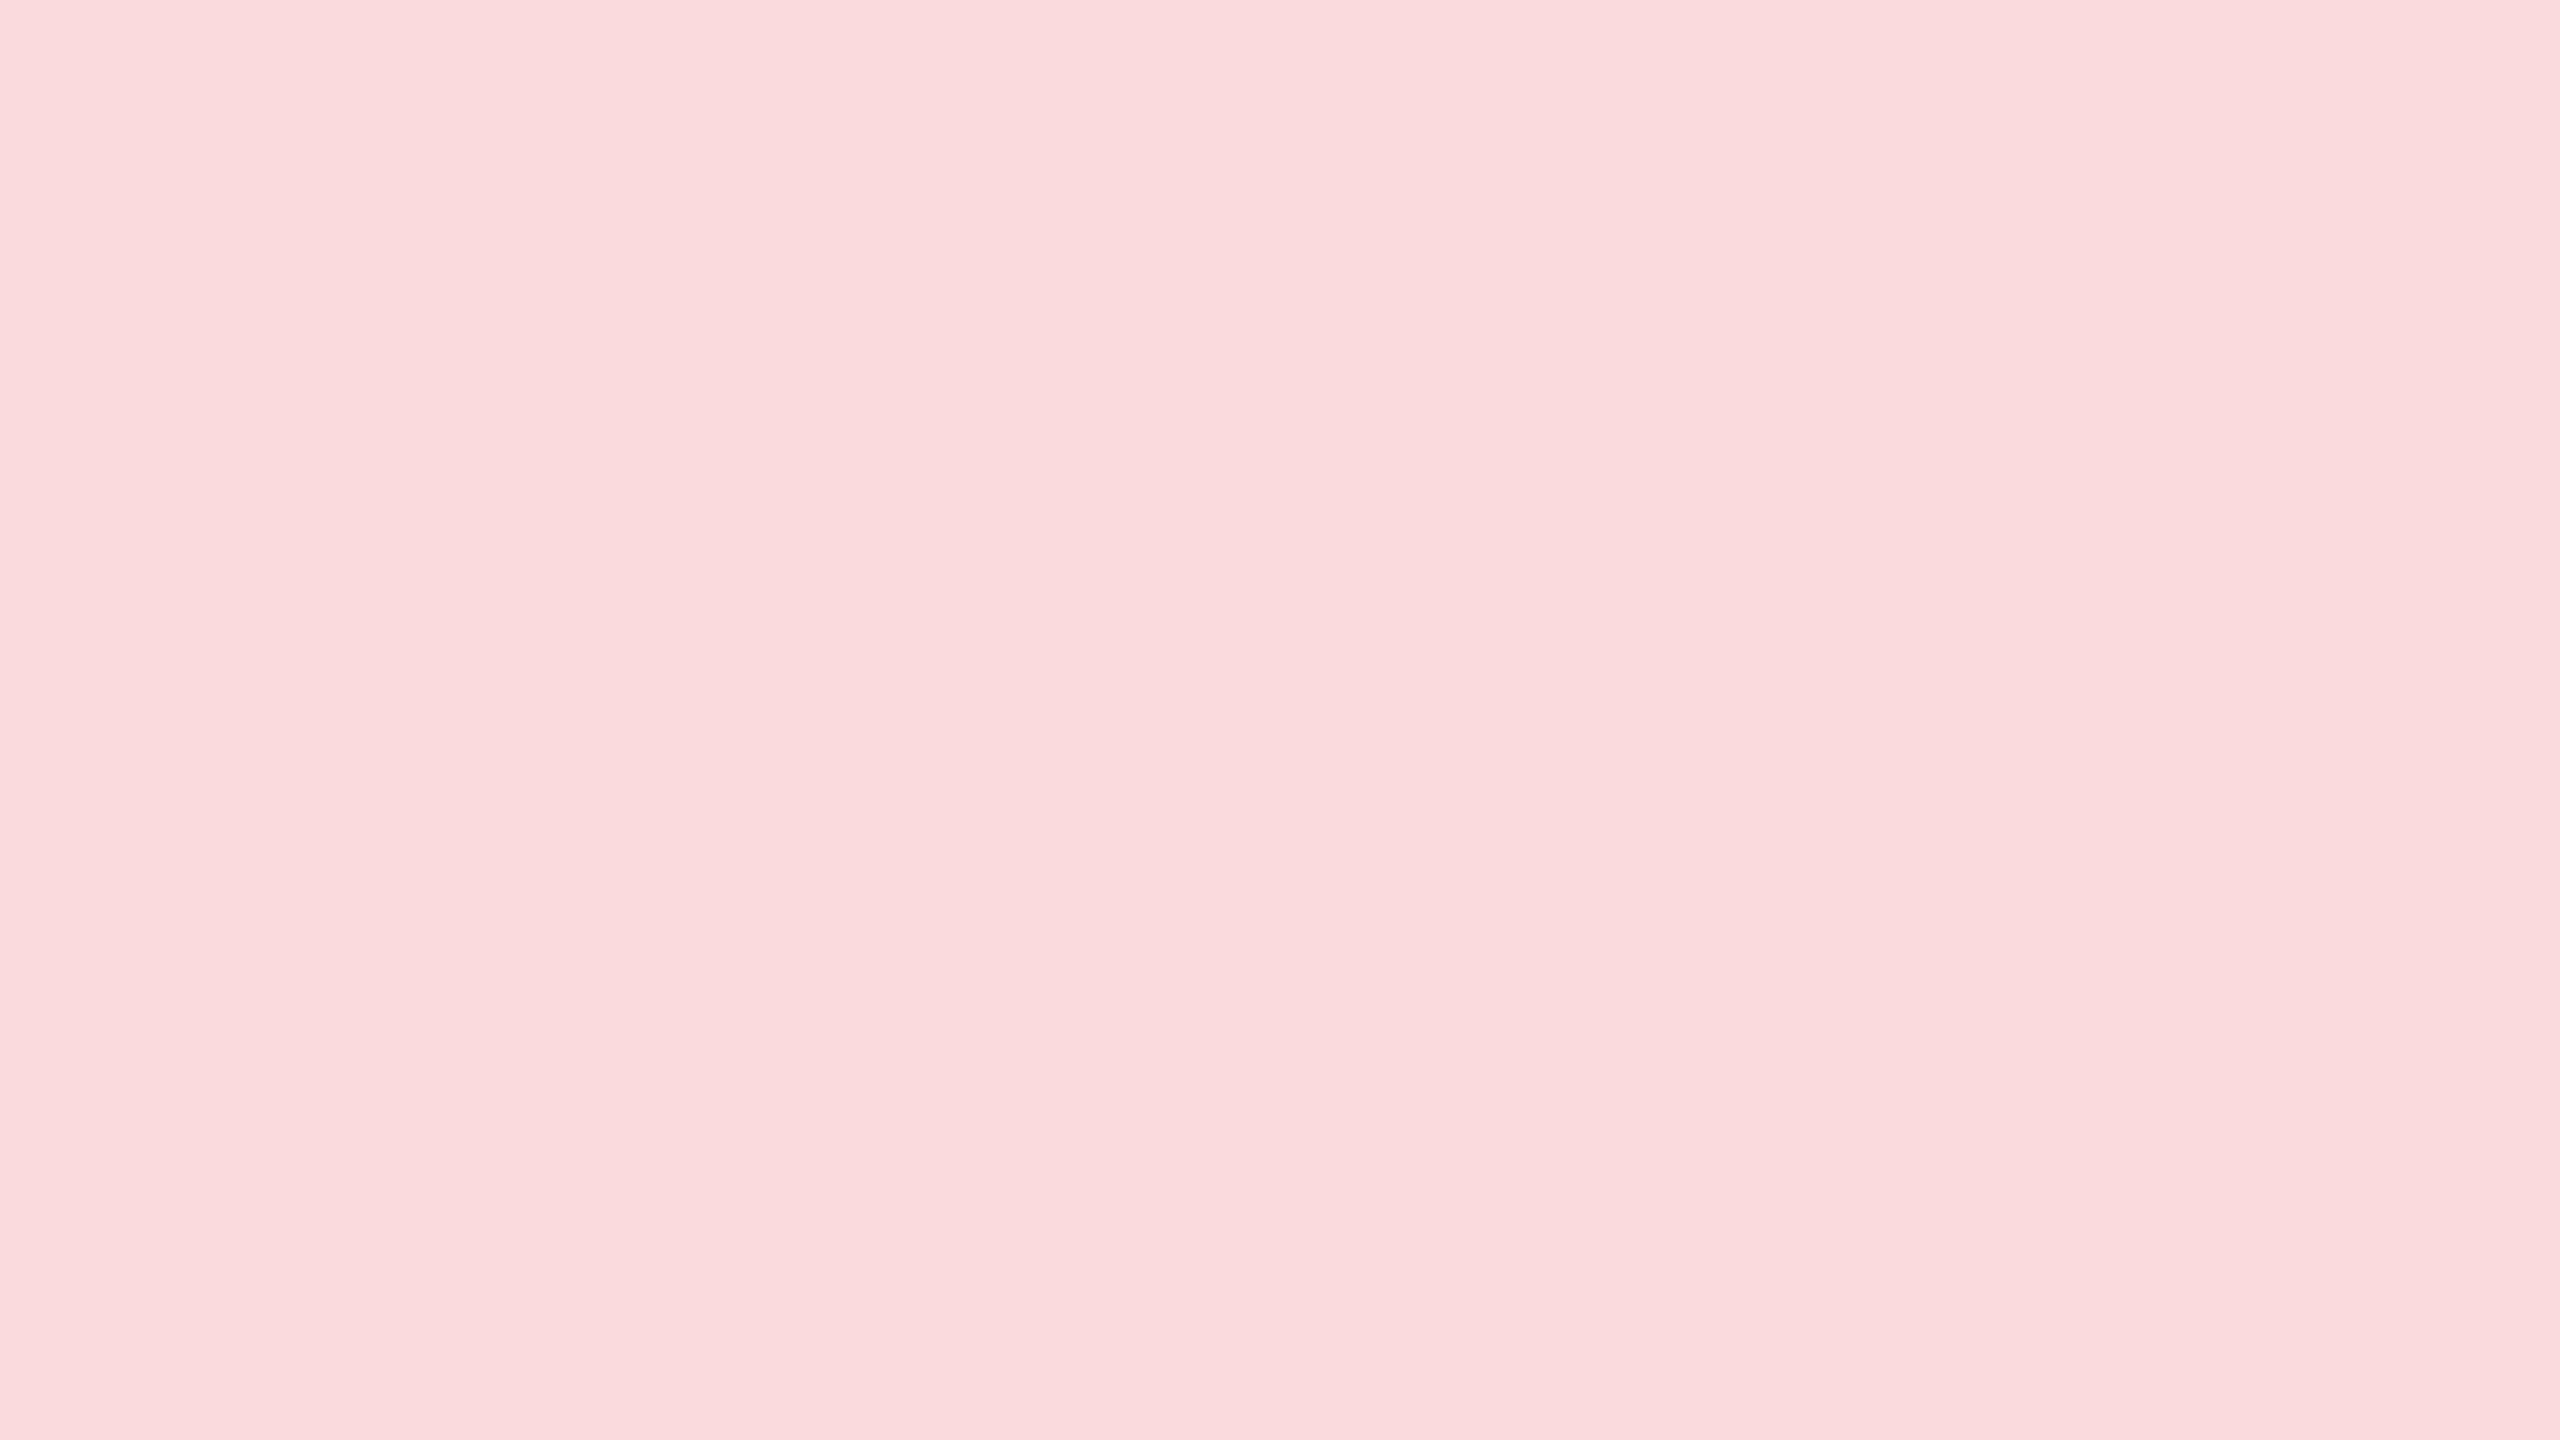 Pastel Pink Aesthetic Computer Wallpapers - Top Free Pastel Pink